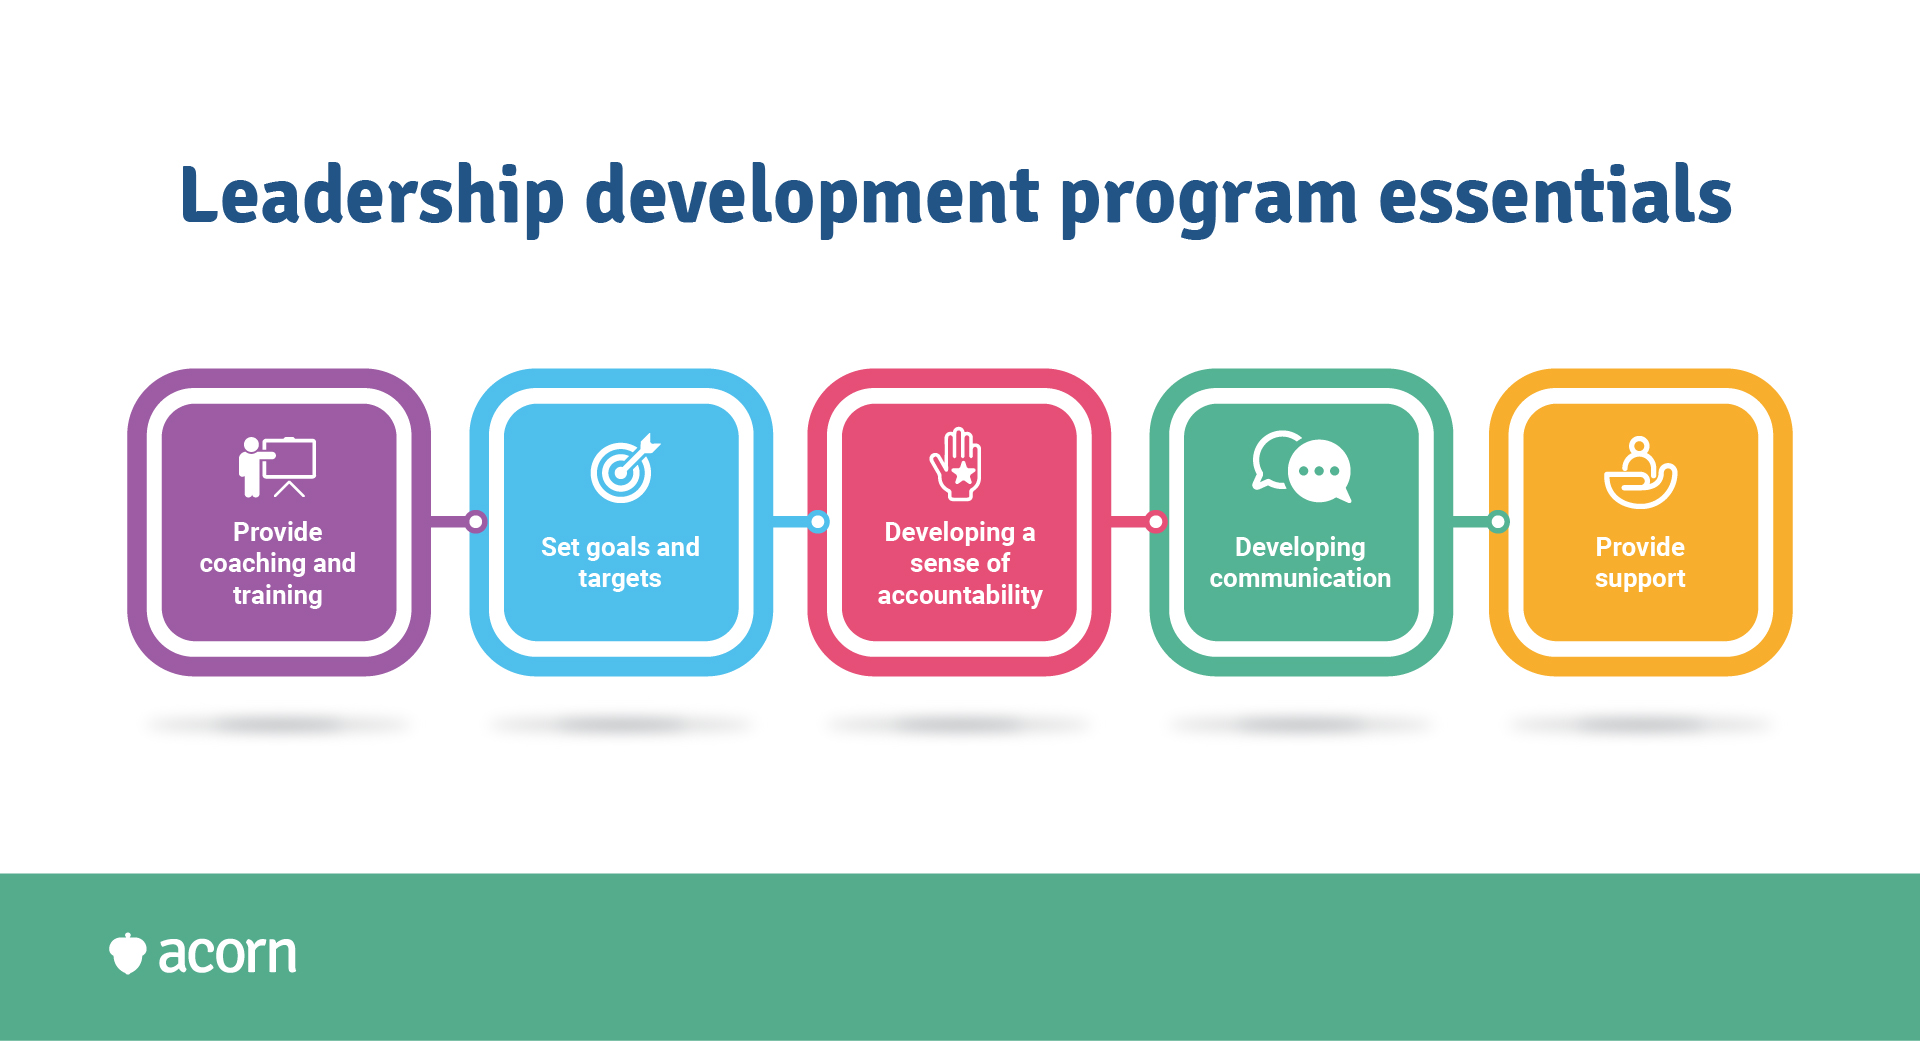 Leadership development program essentials